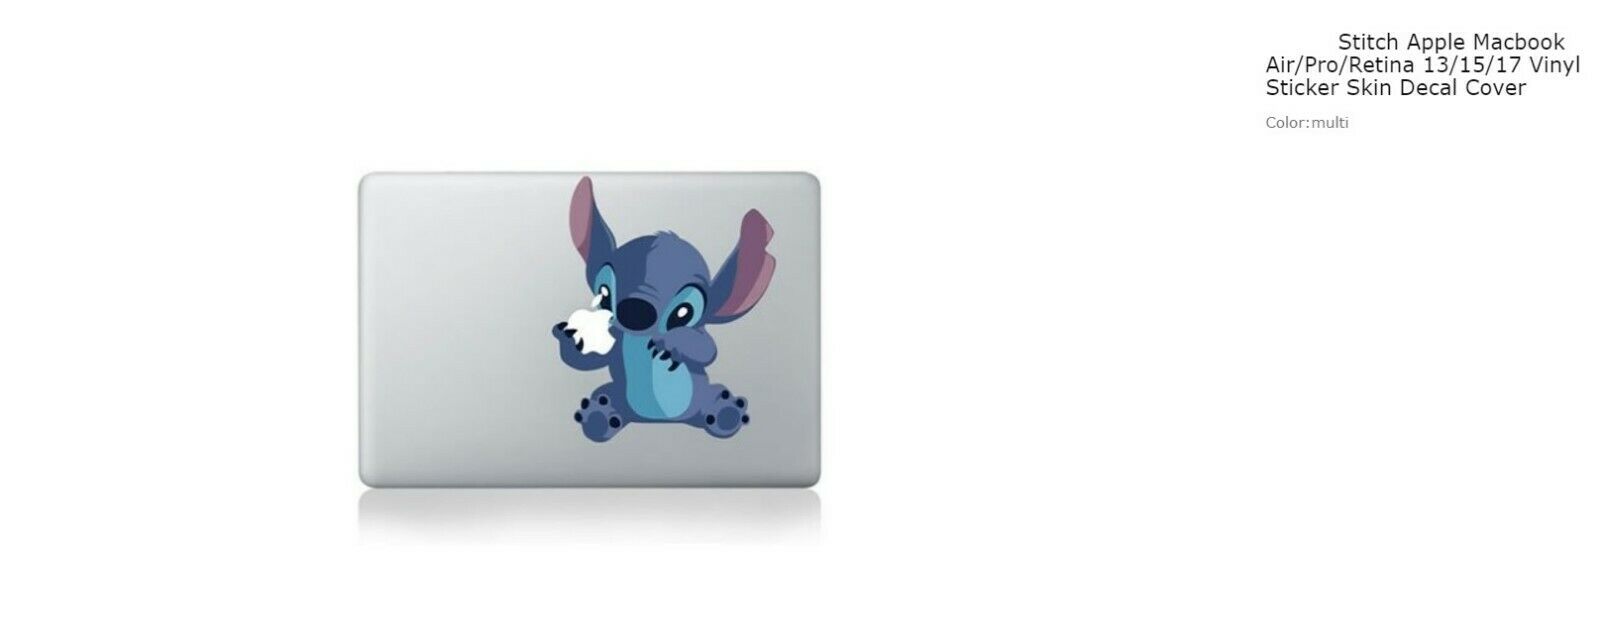 Lilo Stitch Apple Macbook Air/Pro/Retina 13/15/17 Vinyl Sticker Skin Decal Cover